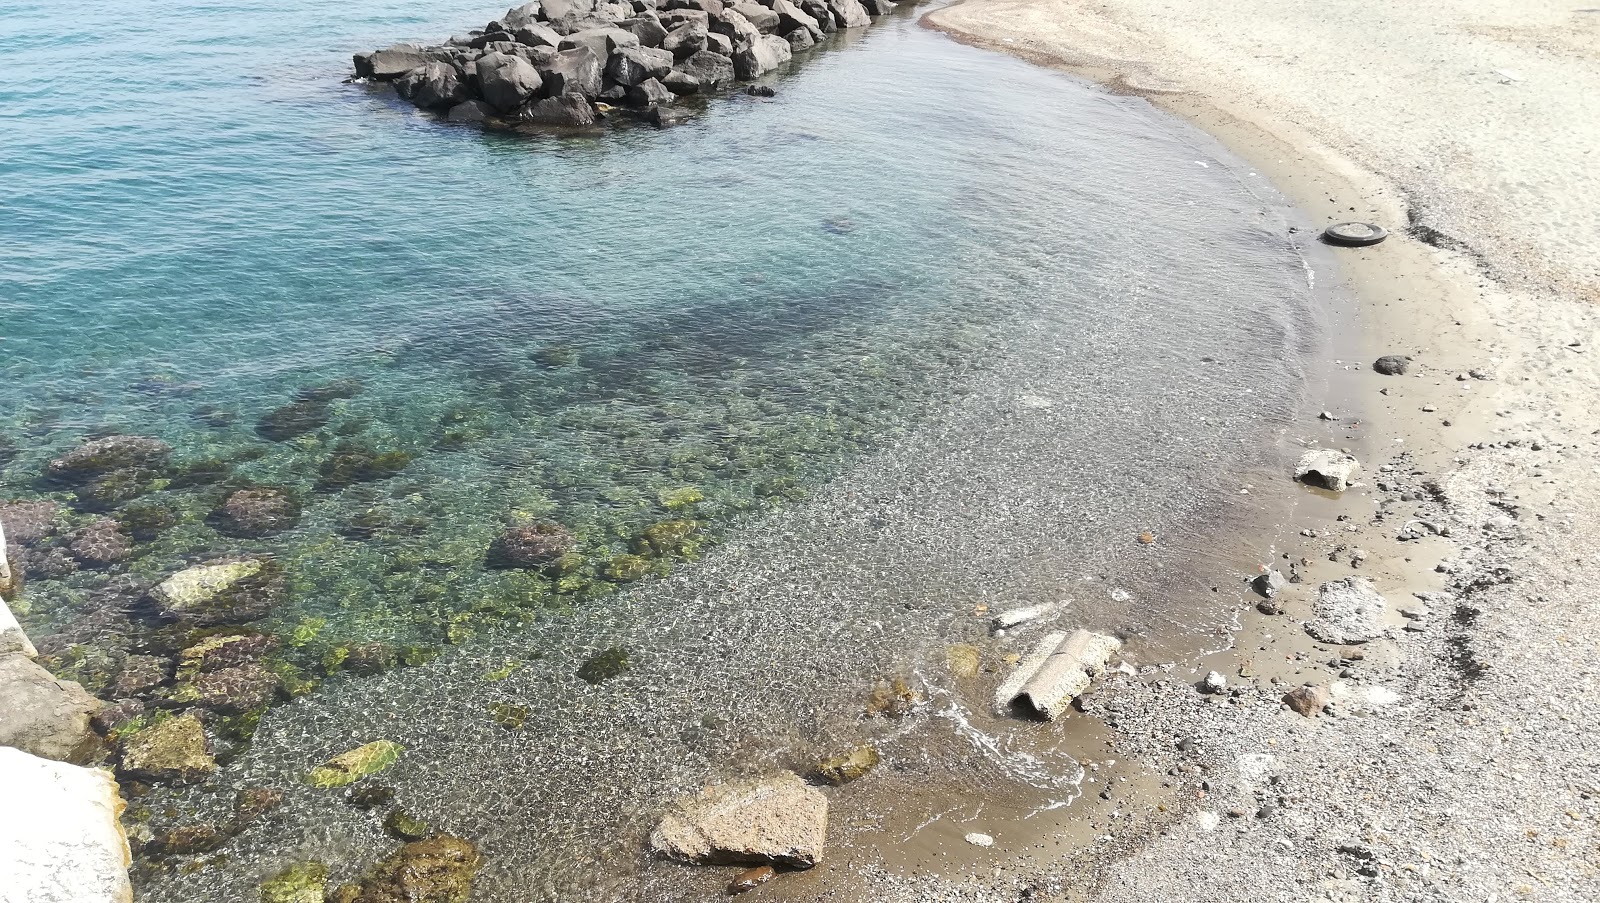 Zdjęcie Spiaggia della Marina i osada